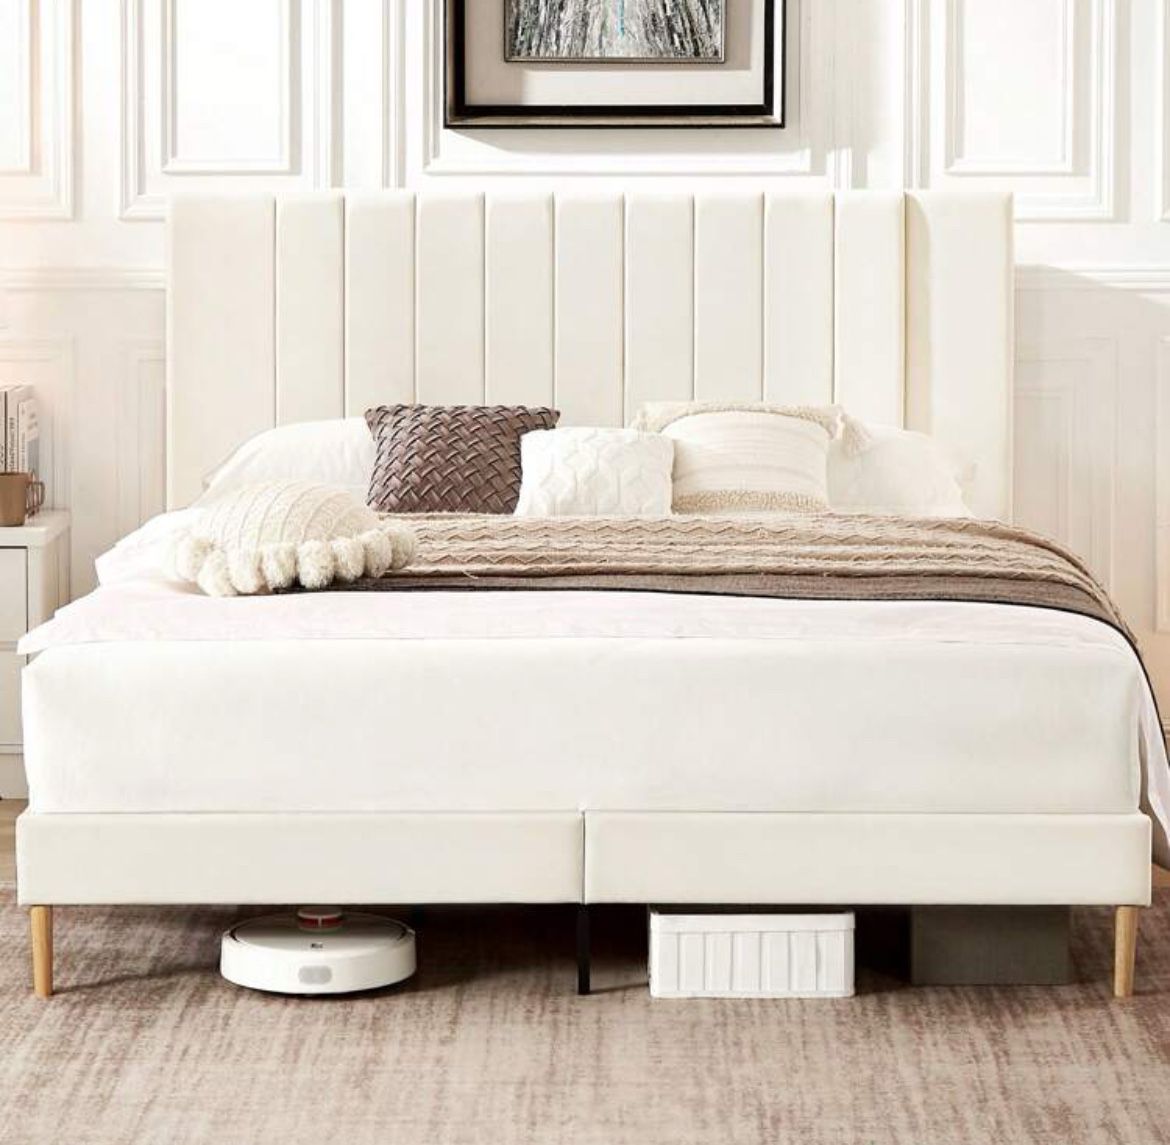 Queen Size Platform Bed Frame With Velvet Upholstered Headboard And Wooden Slats Support